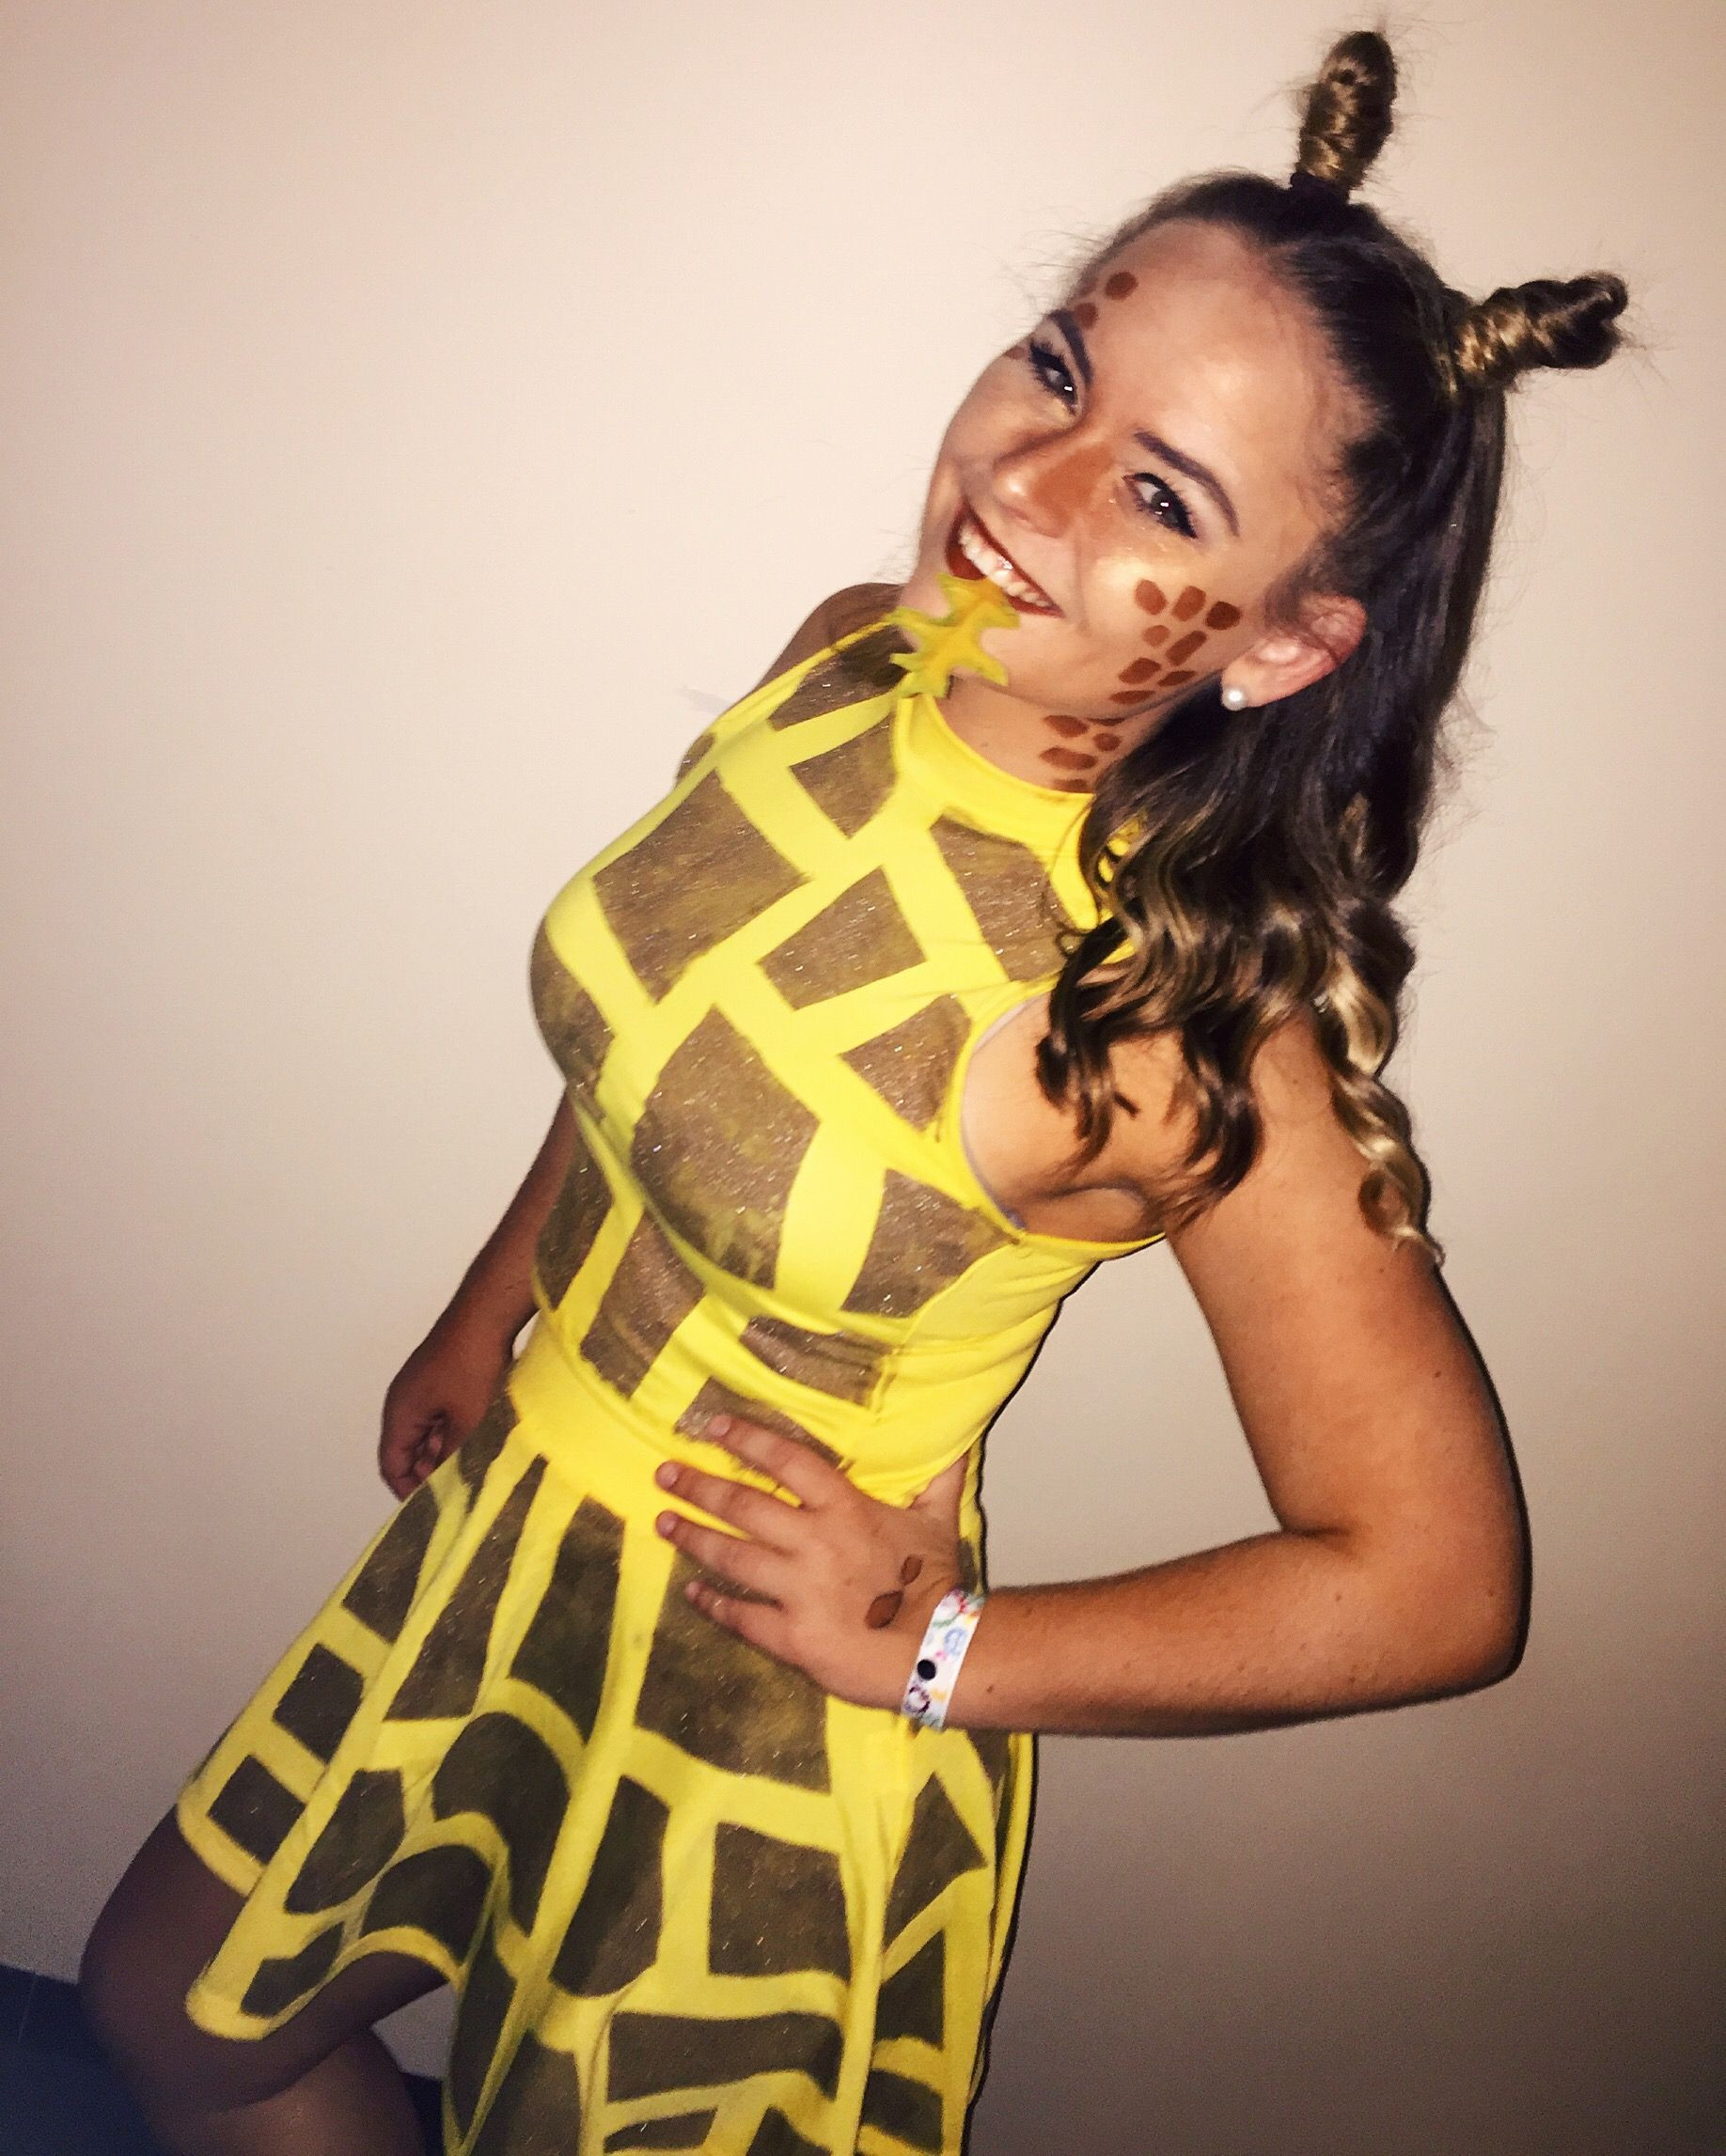 Giraffe Costume DIY
 DIY Giraffe costume